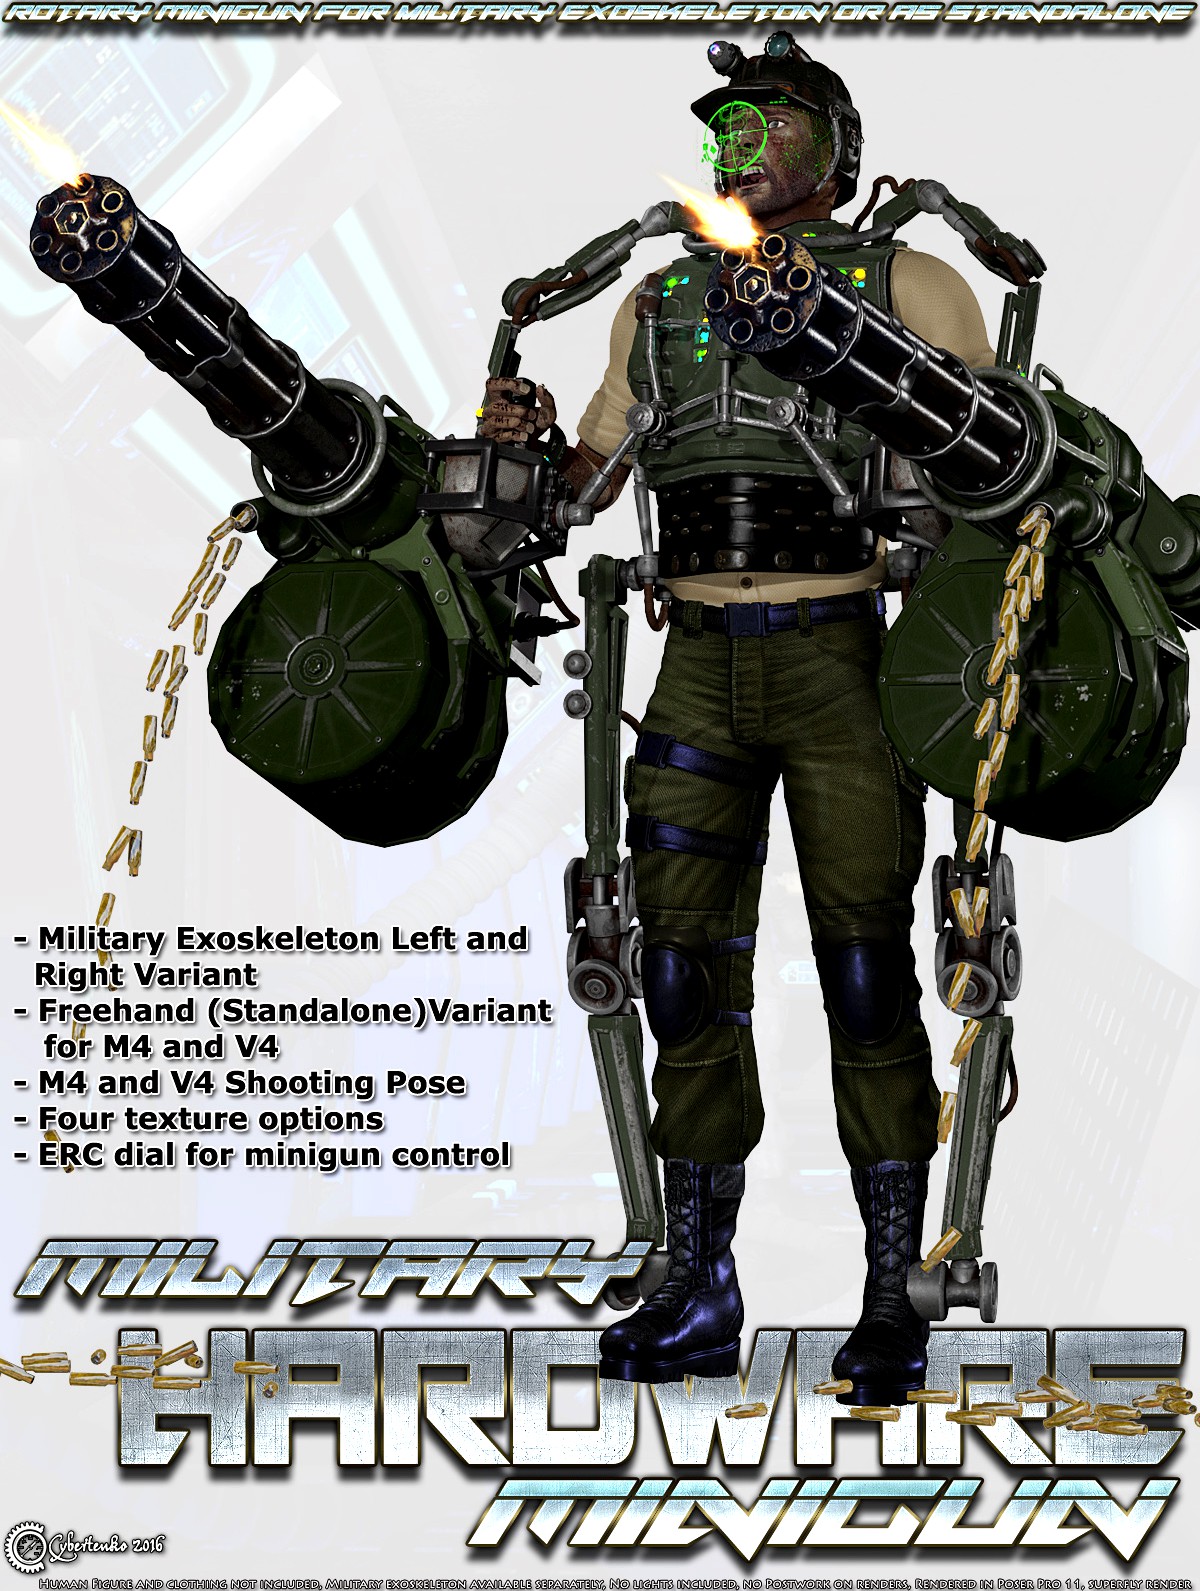 Military Hardware - The Minigun